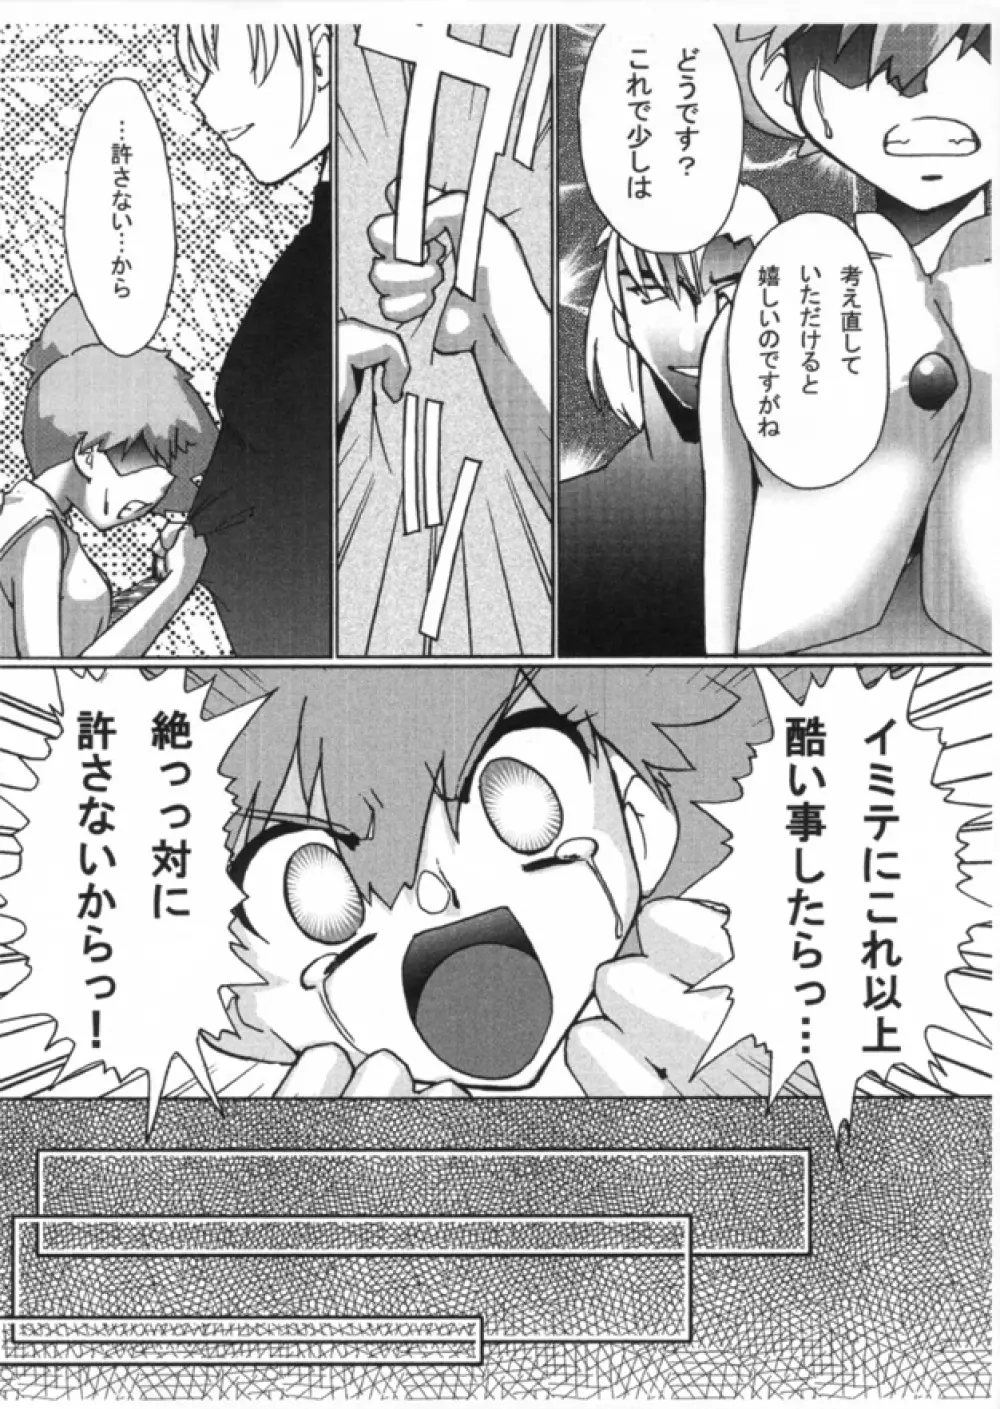 KASUMIX XPLOSION Kasumi Comic part5 - page38